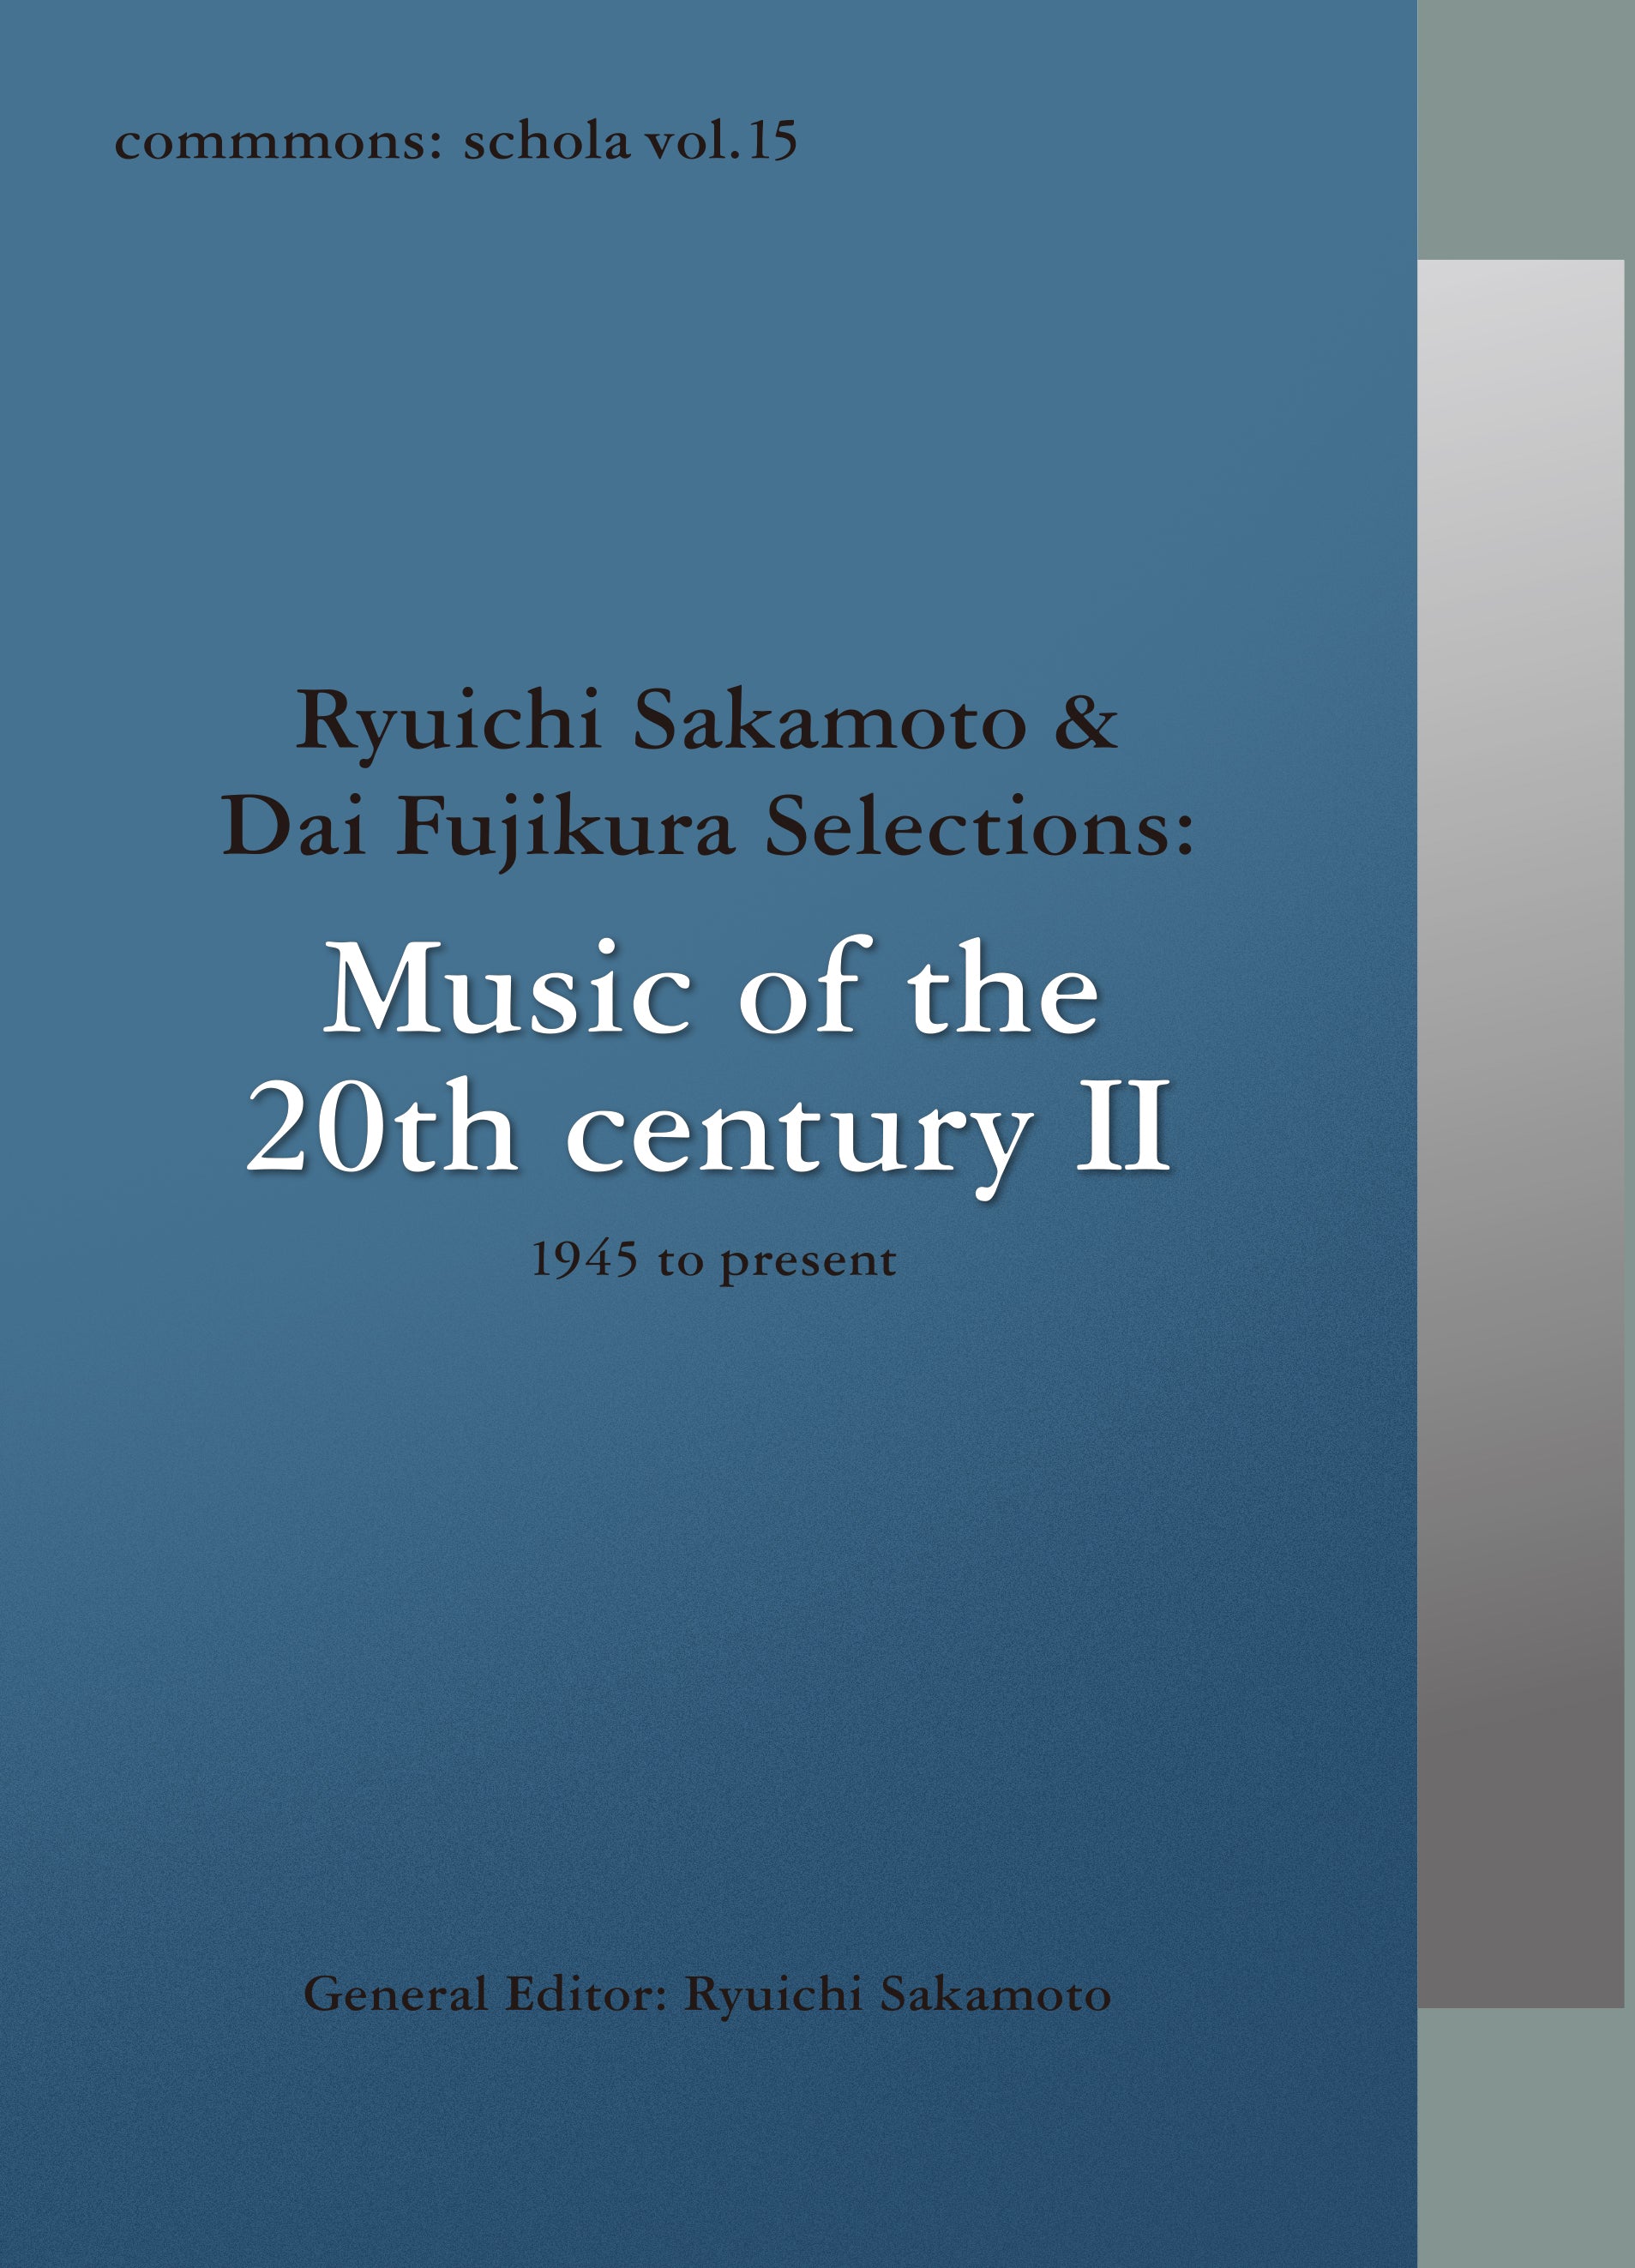 commmons: schola vol. 15 Ryuichi Sakamoto & Dai Fujikura 